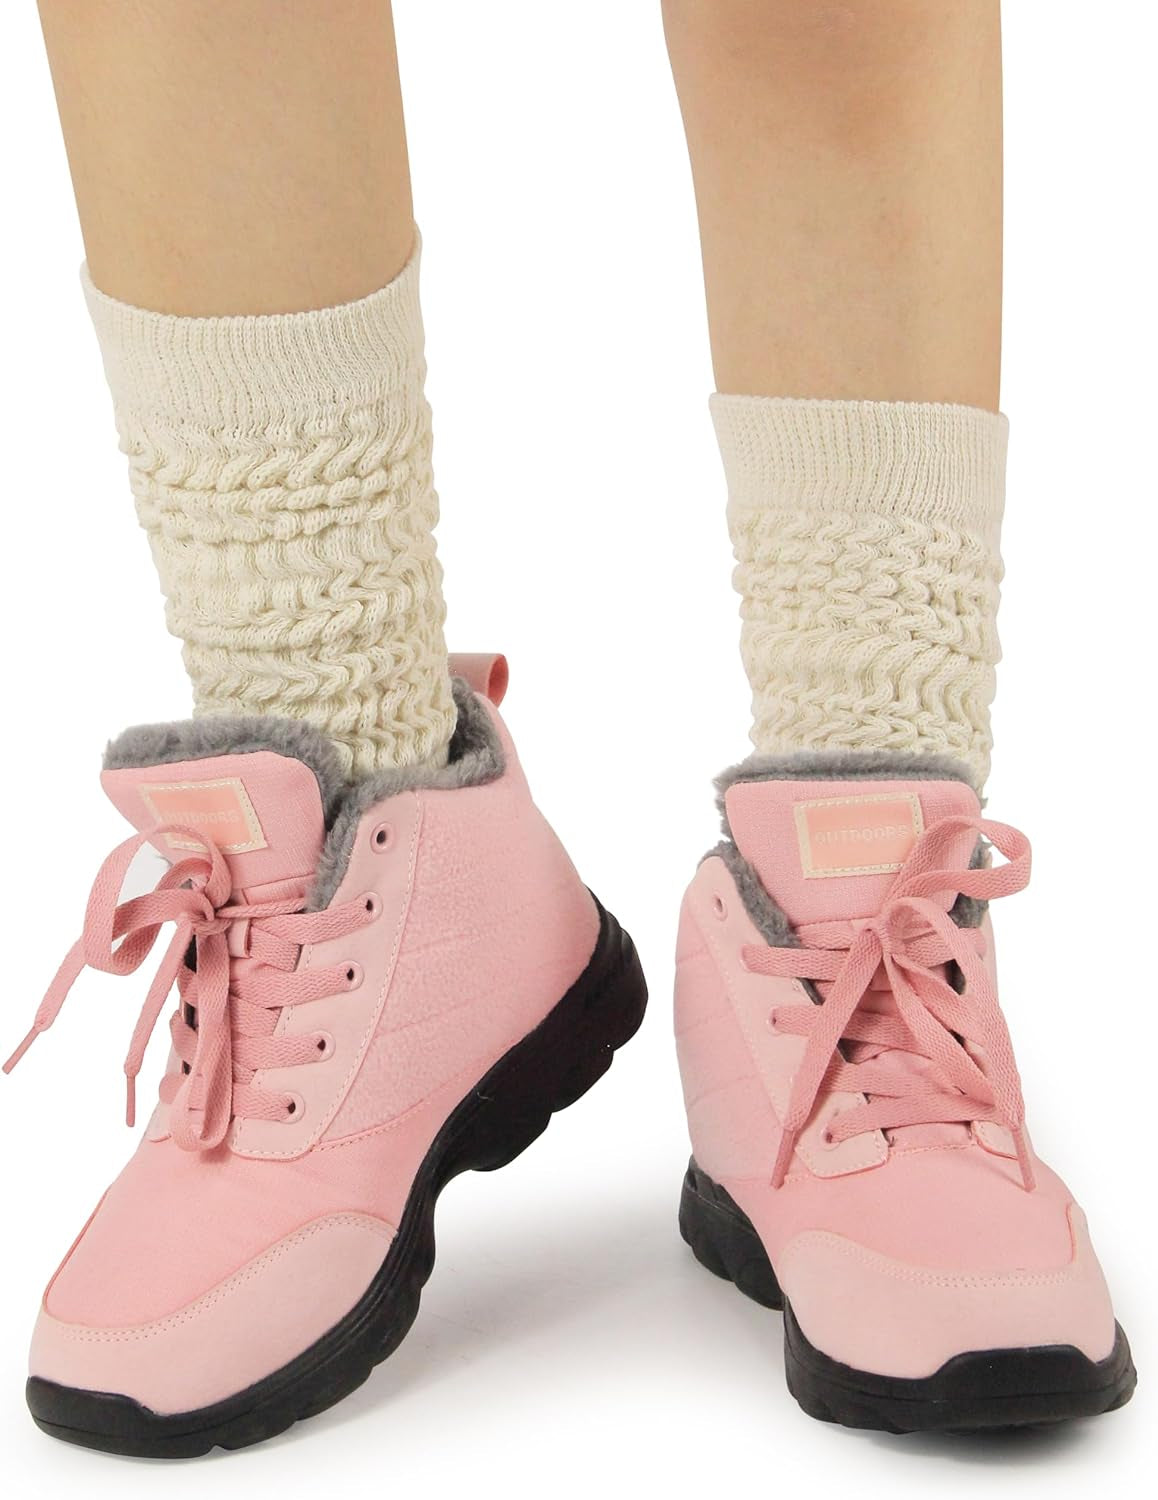 Slouch Socks Women Thigh High Boot Socks Soft Scrunch Socks Size 5-11